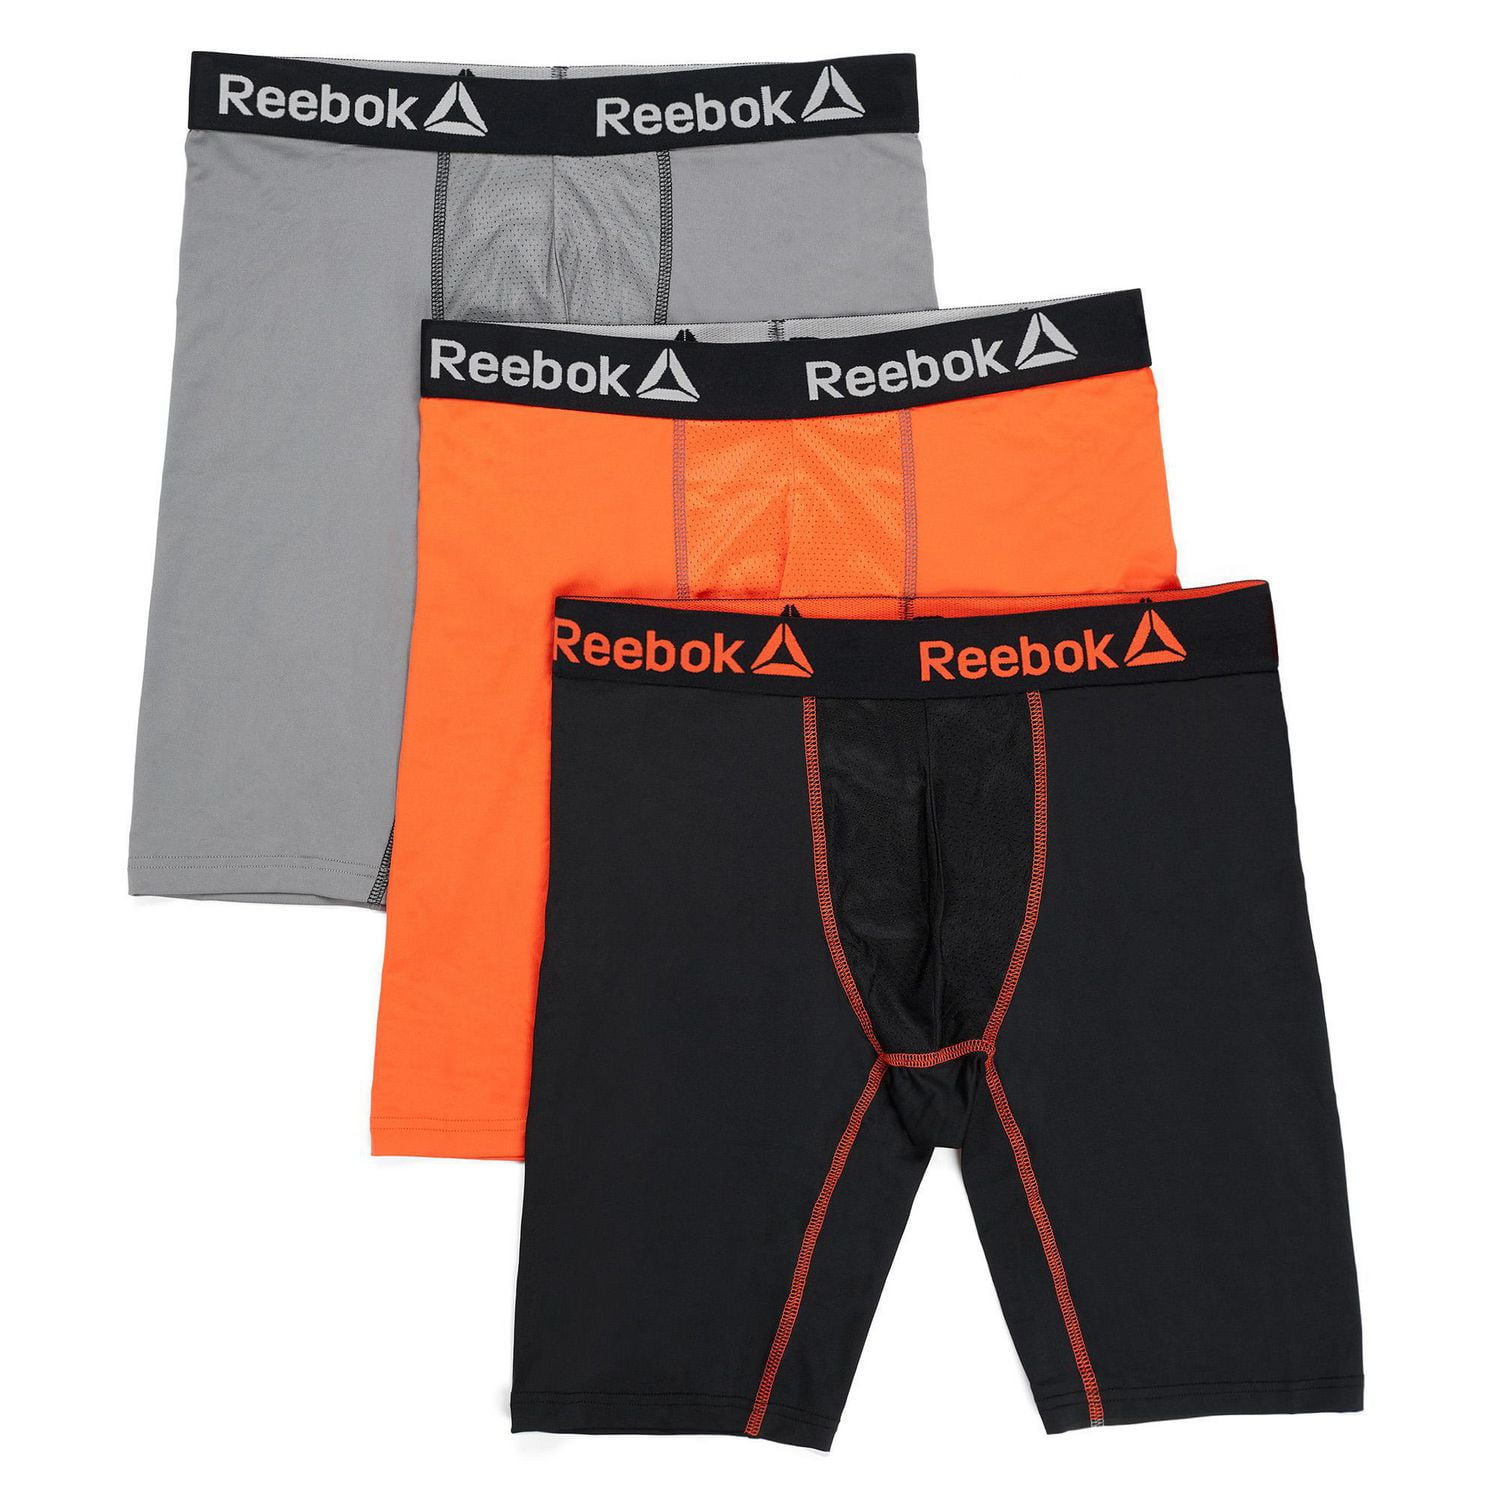 Reebok Mens Performance Training Boxer Briefs Grey size SMALL